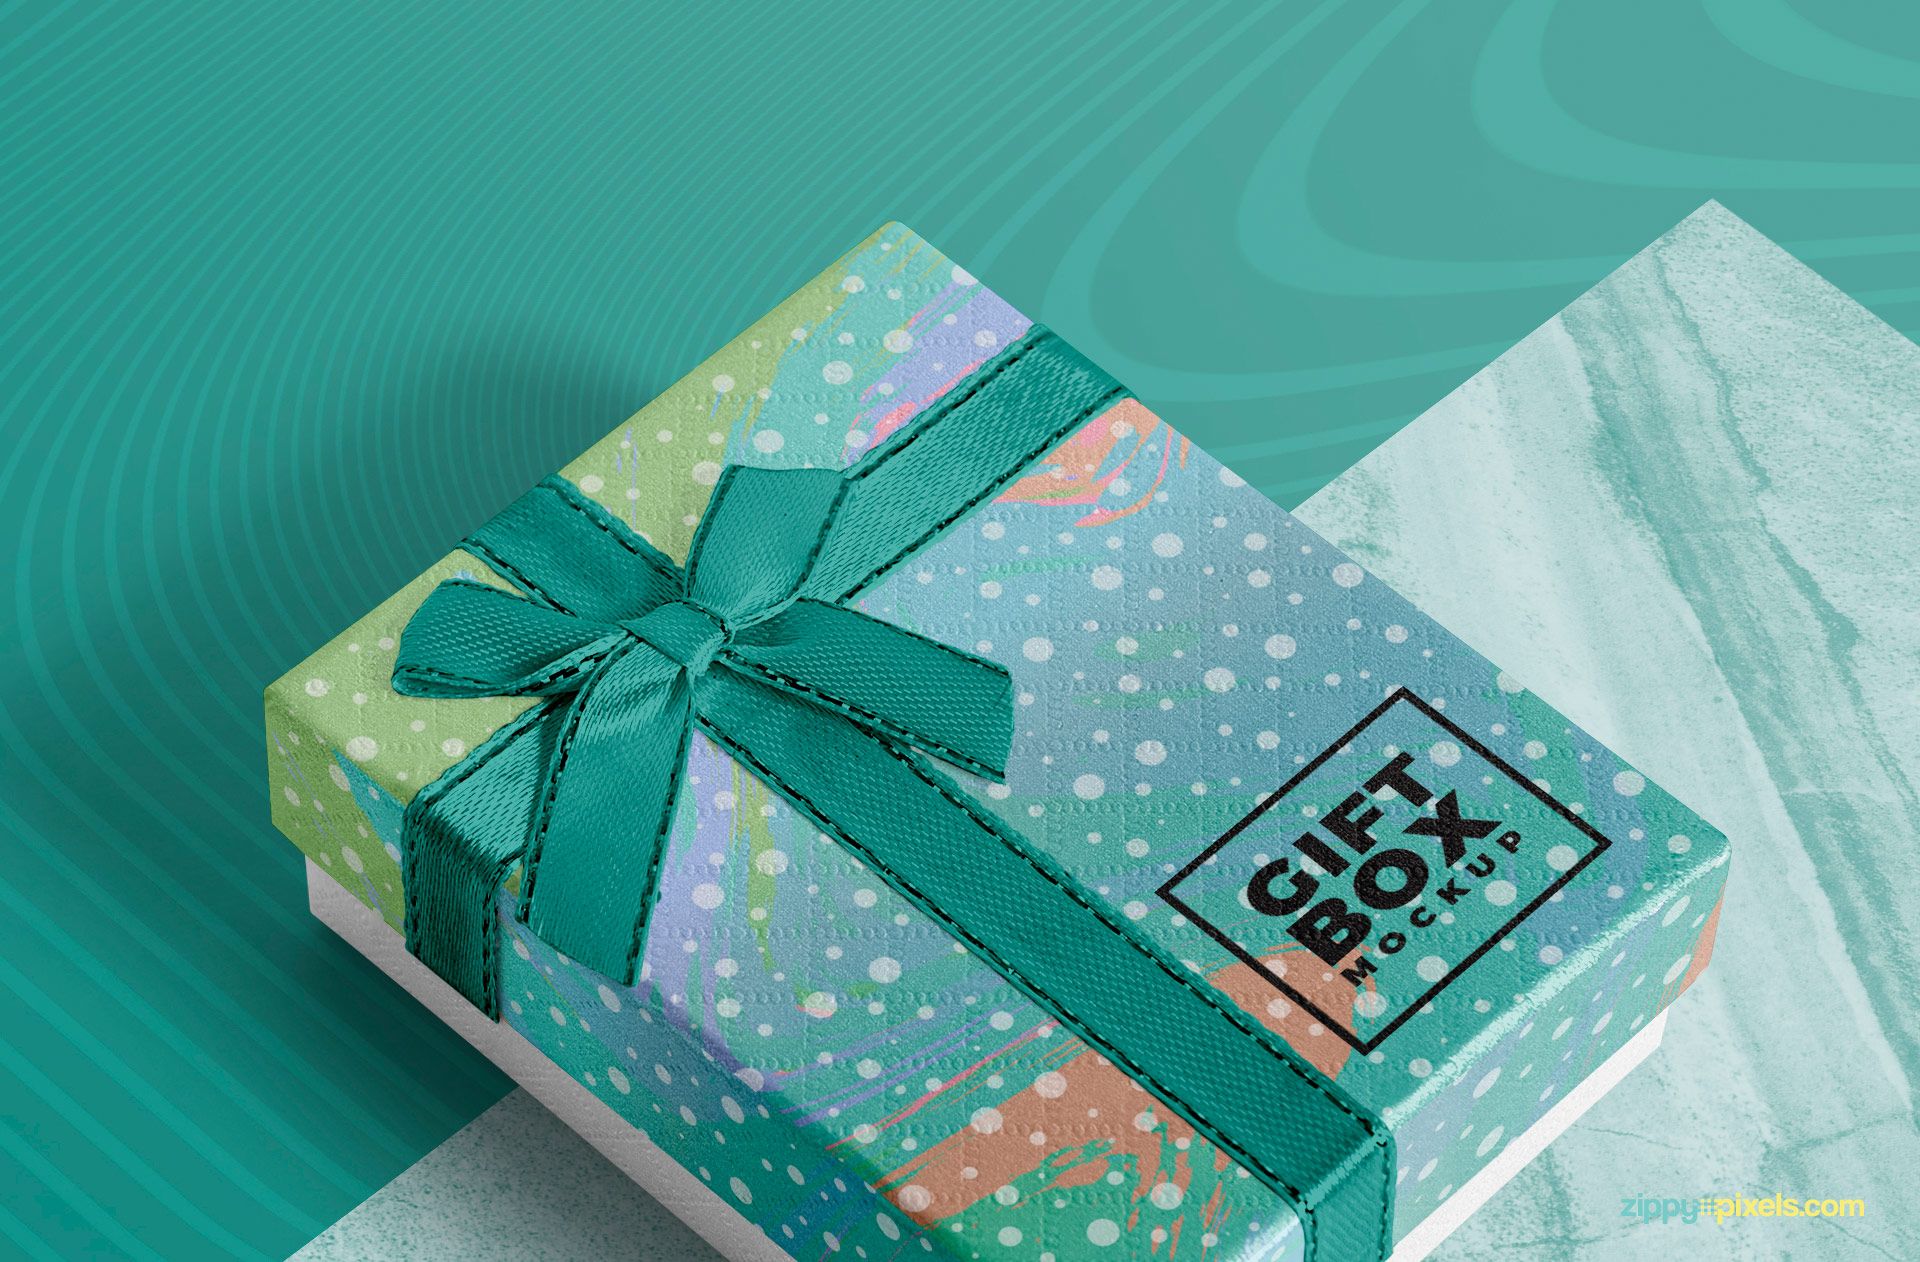 Photorealistic Gift Box Mockup Free | ZippyPixels | Box mockup, Free